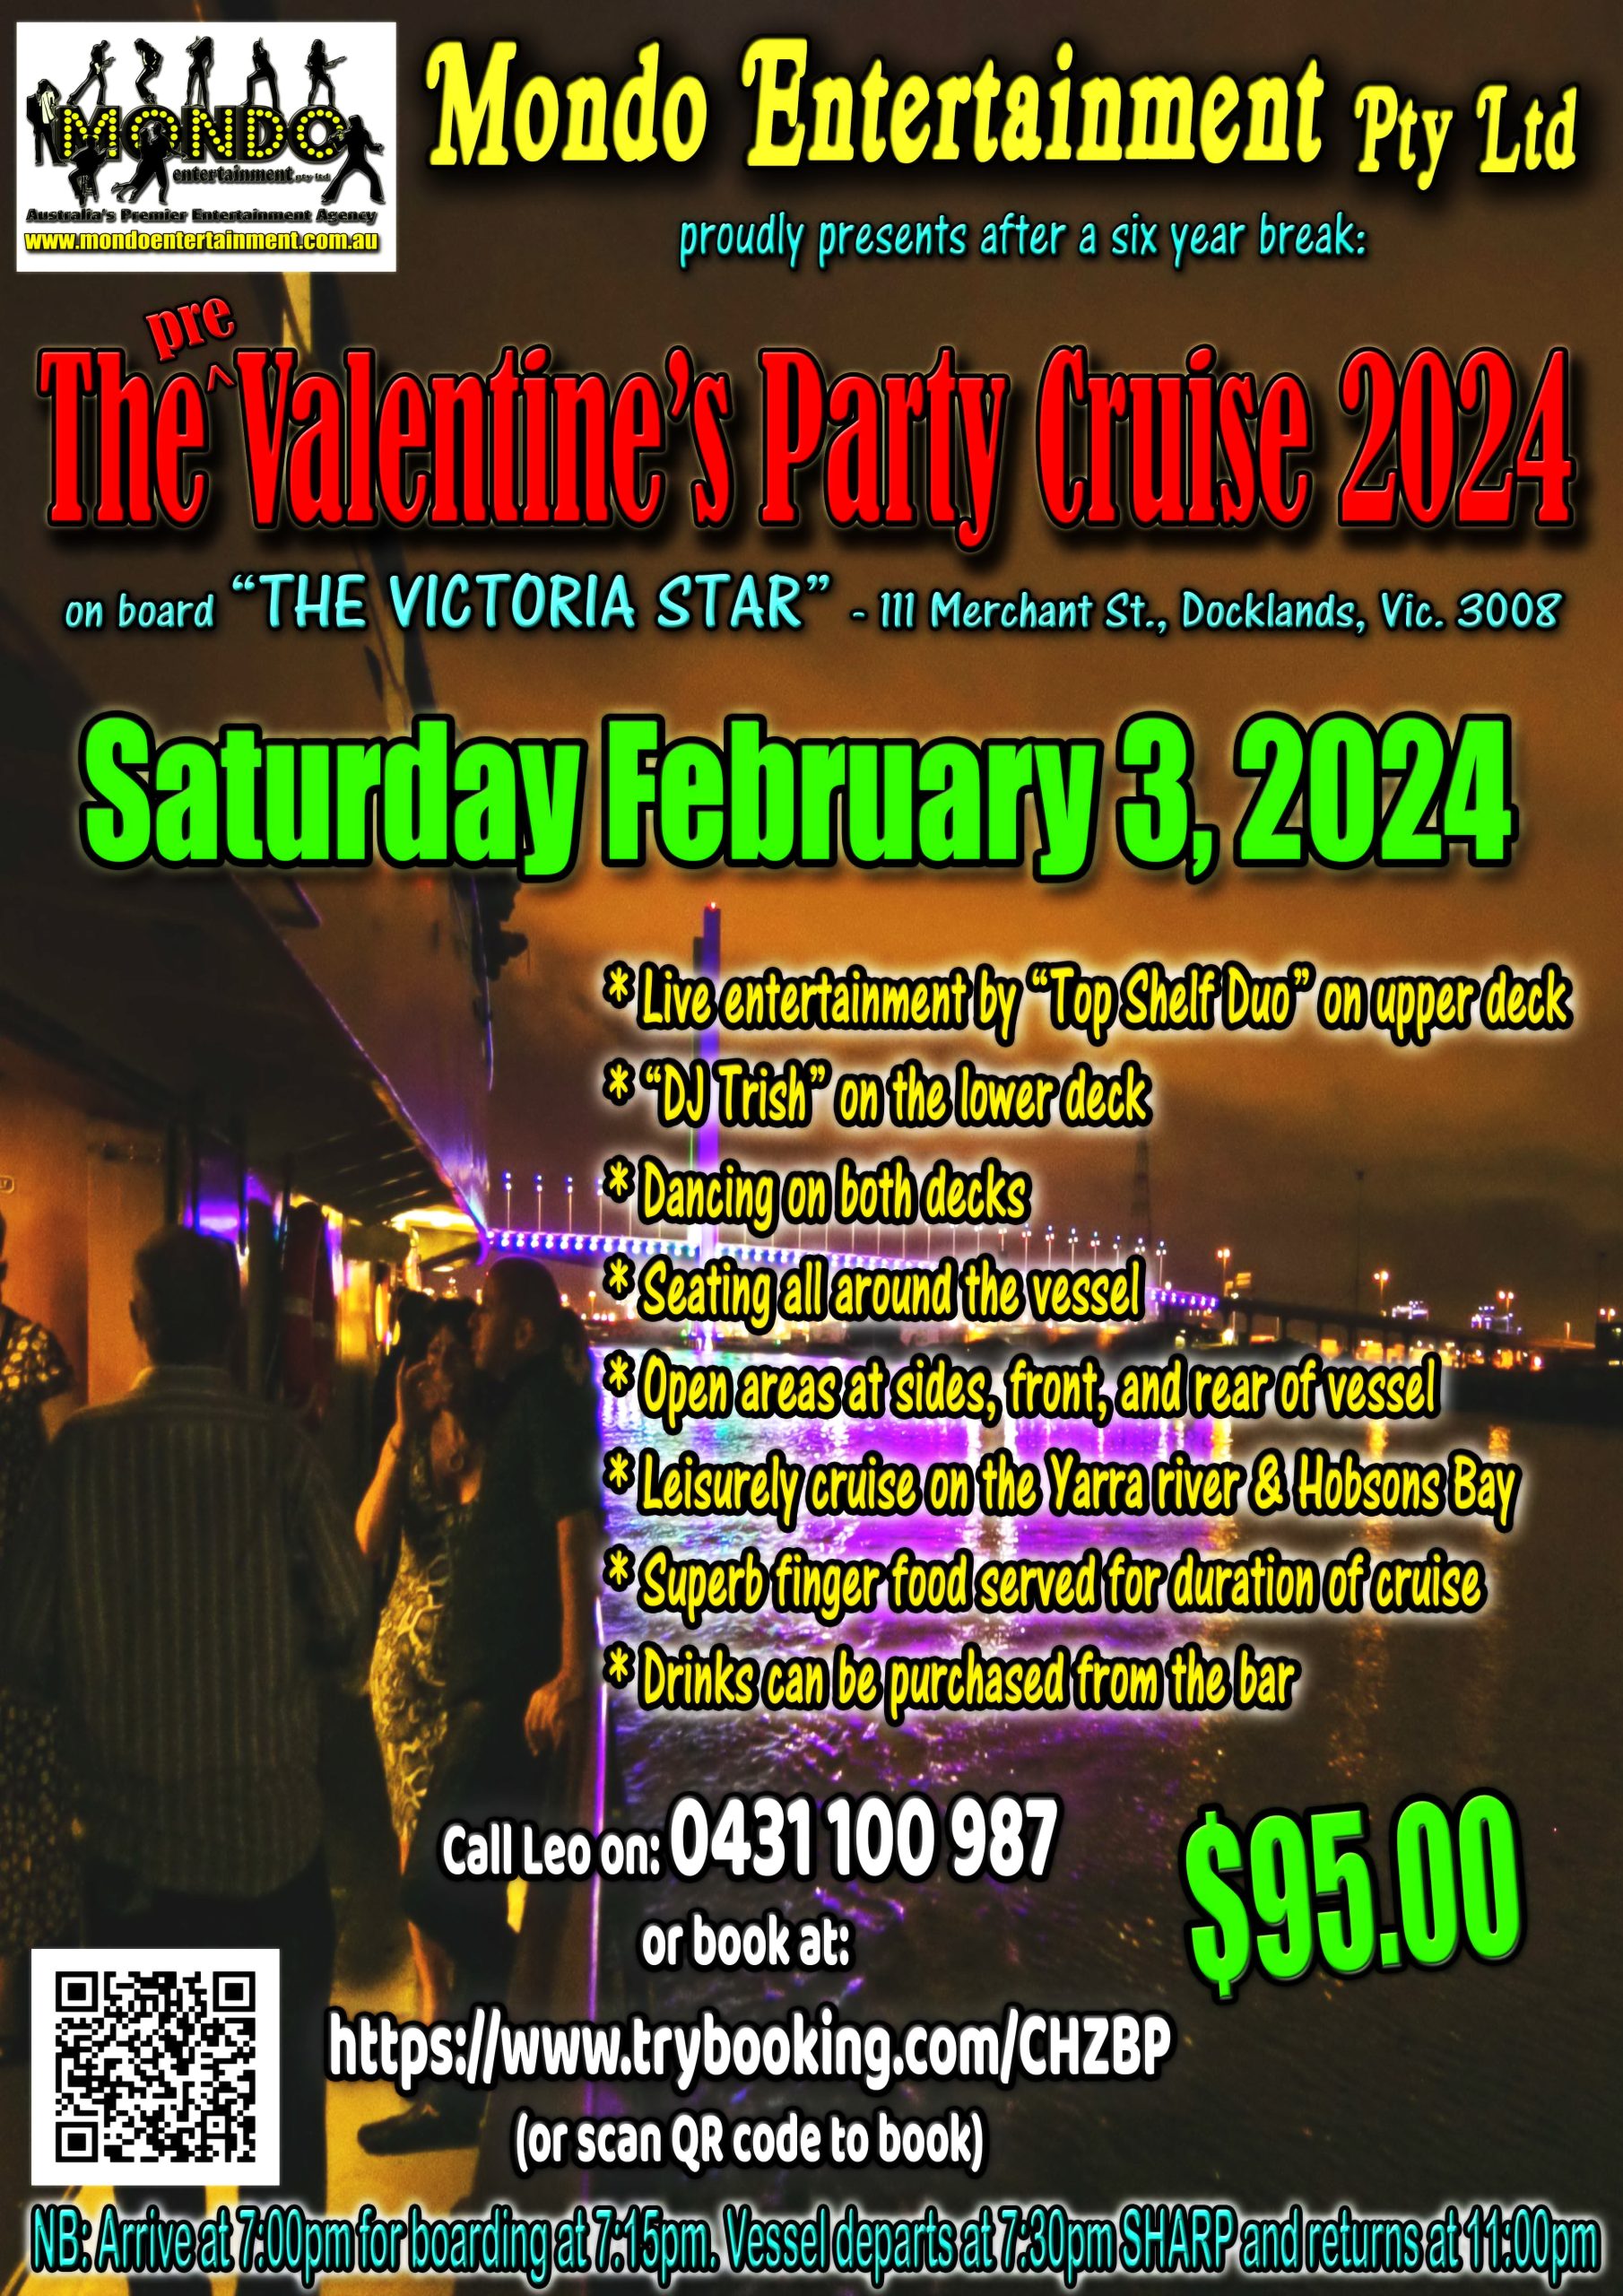 The "pre" Valentine's Party Cruise 2024 MONDO ENTERTAINMENT PTY